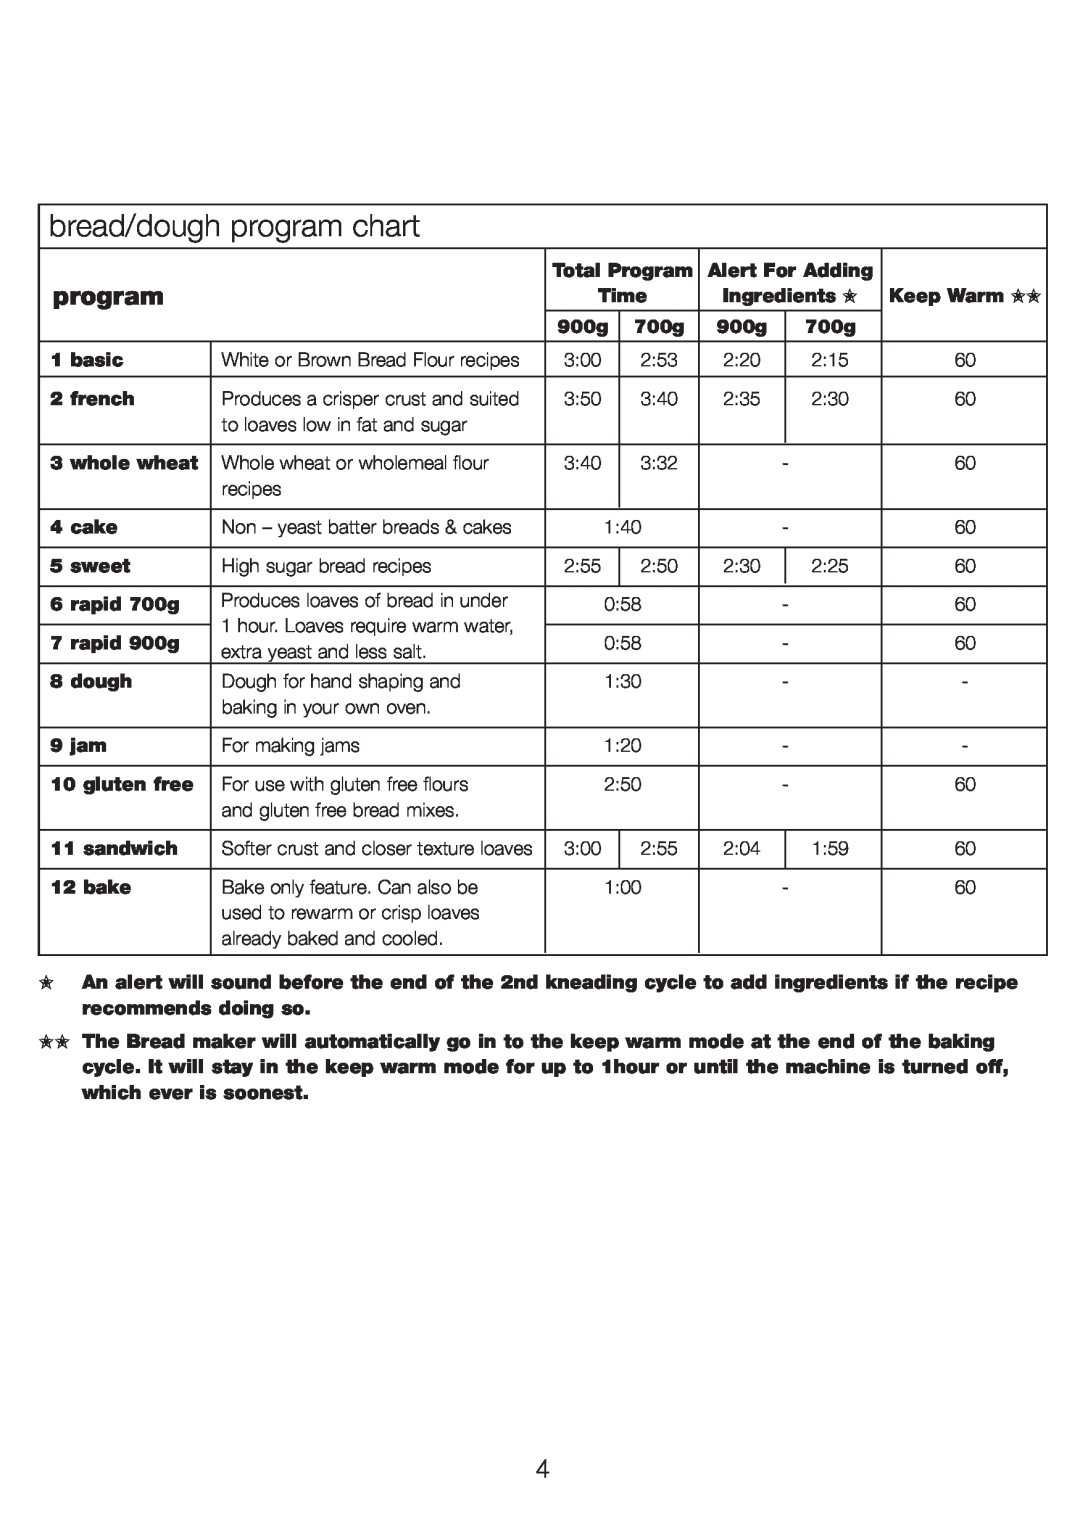 Kenwood BM210 manual bread/dough program chart 